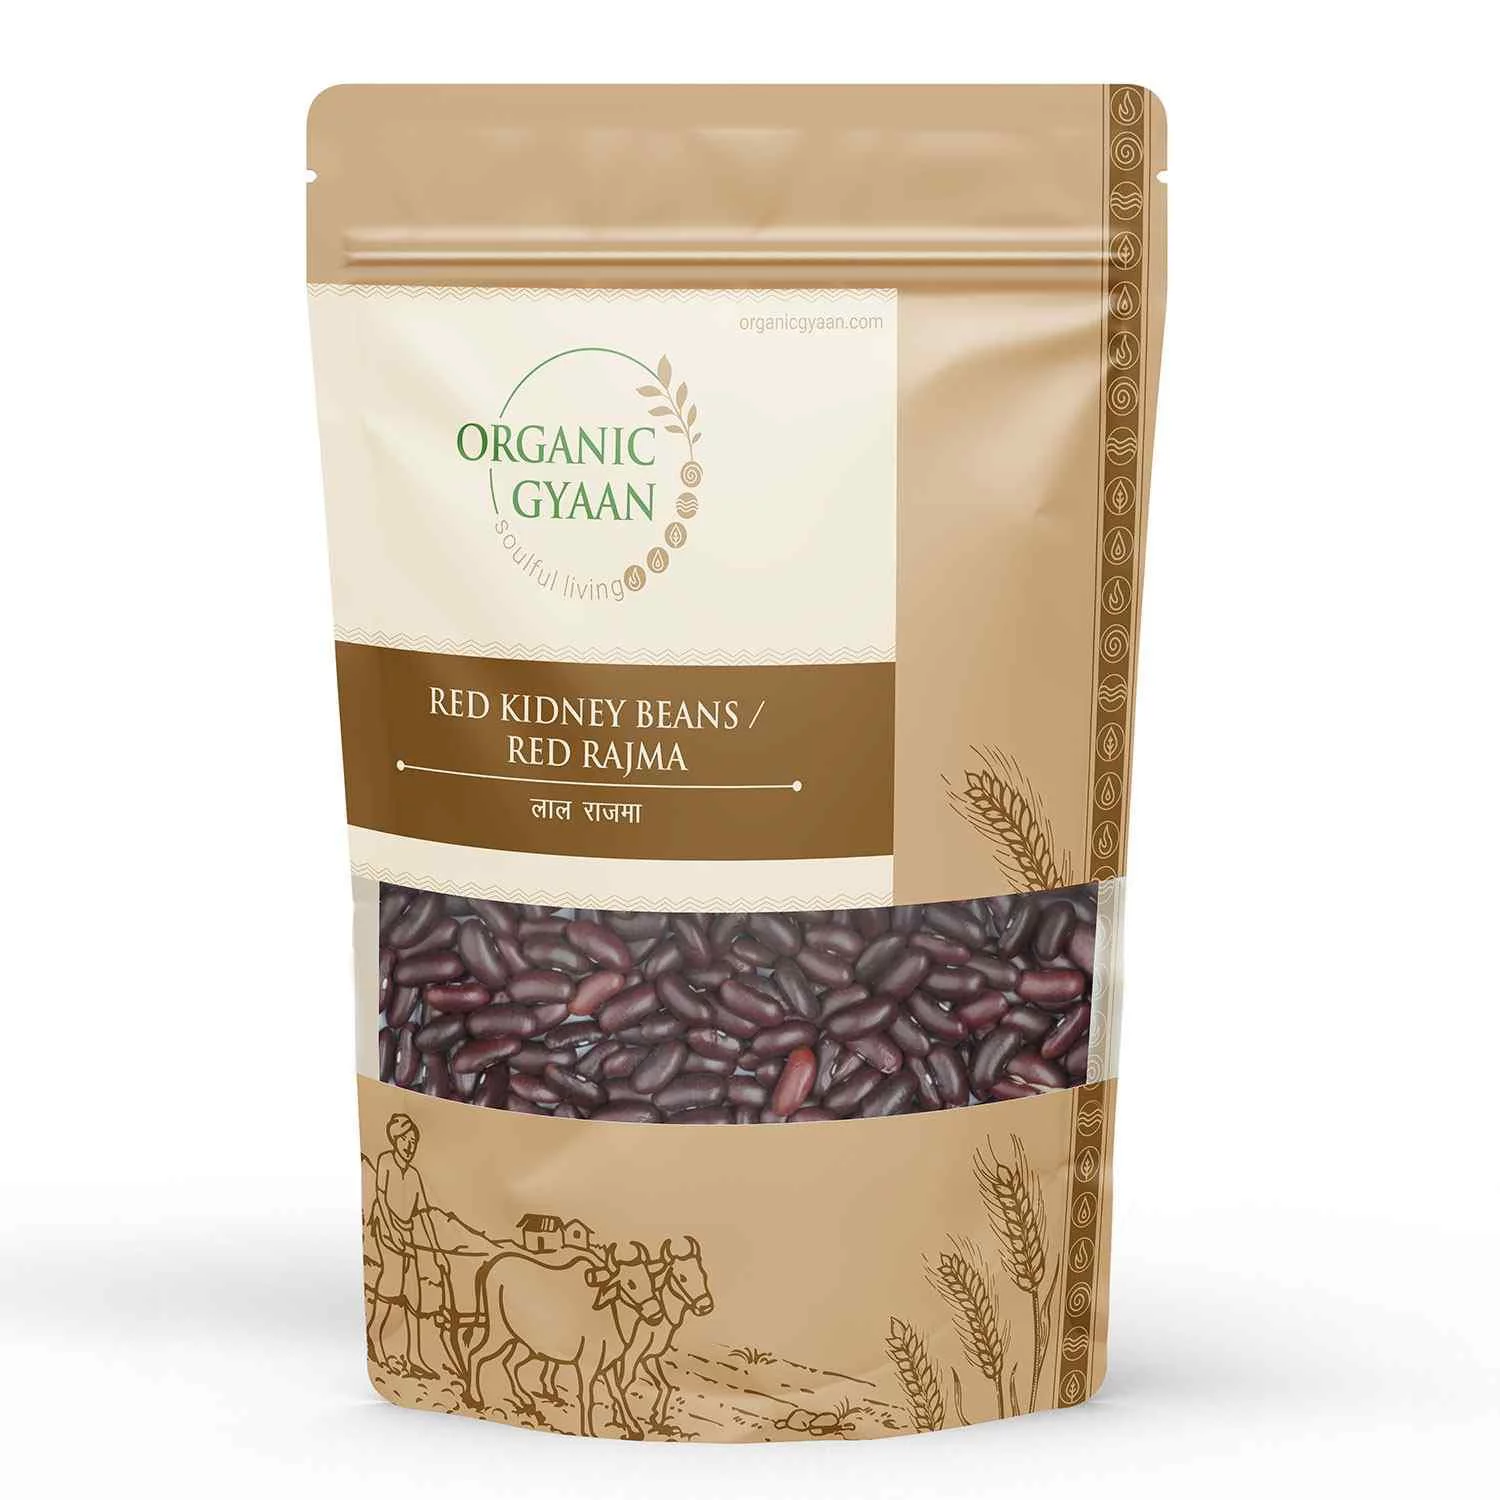 Organic Gyaan Organic Red Kidney Beans / Red Rajma (900 gms)